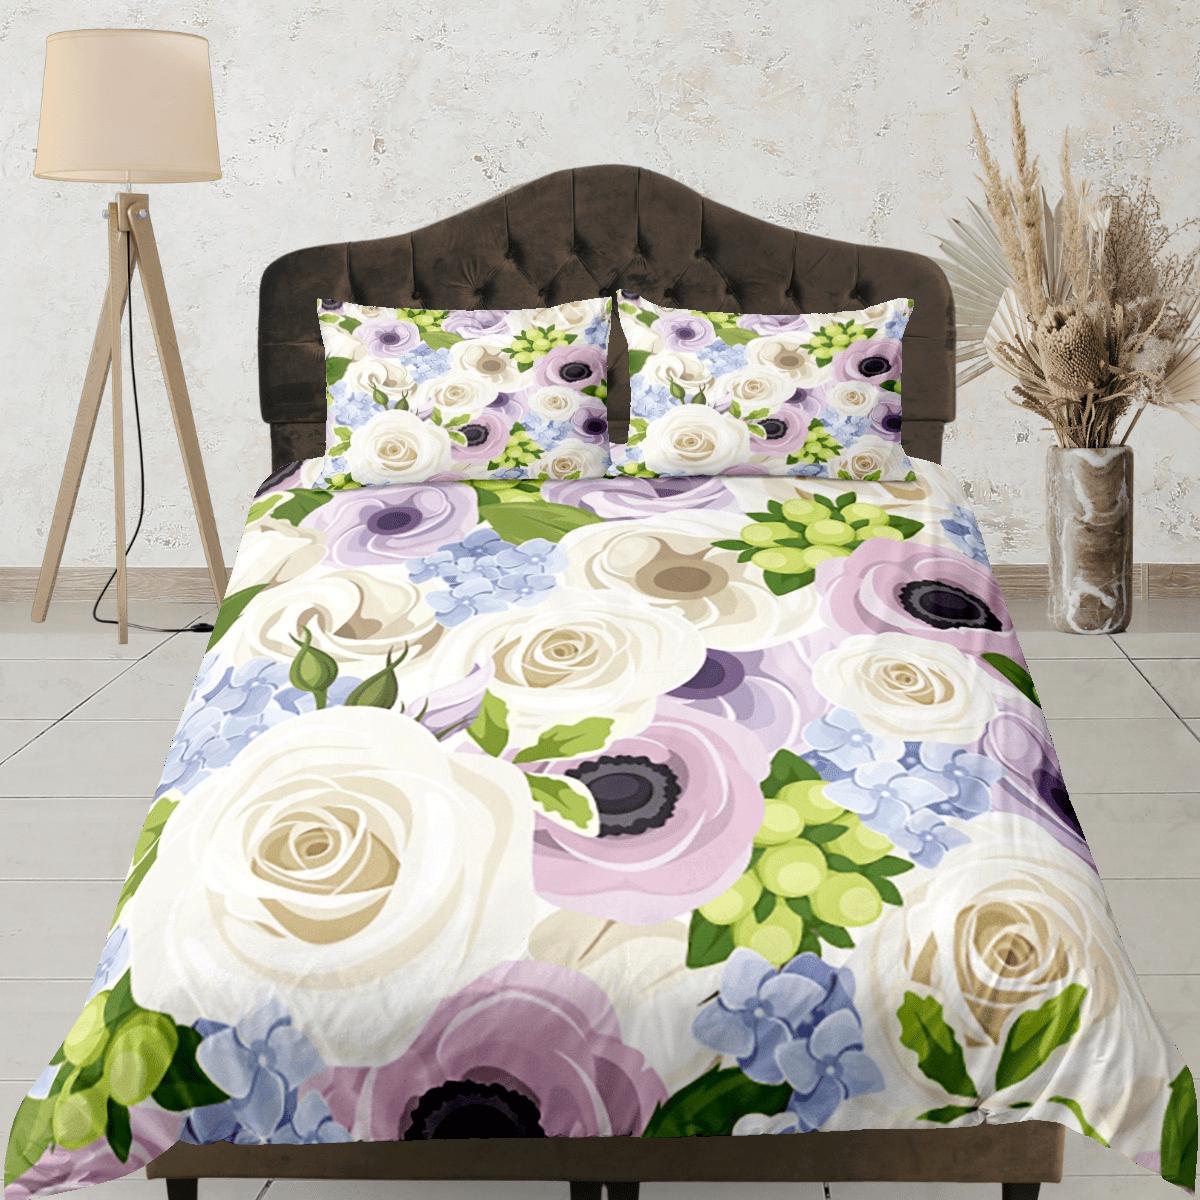 daintyduvet Roses Duvet Cover Set Colorful Girly Bedspread, Floral Dorm Bedding Pillowcase